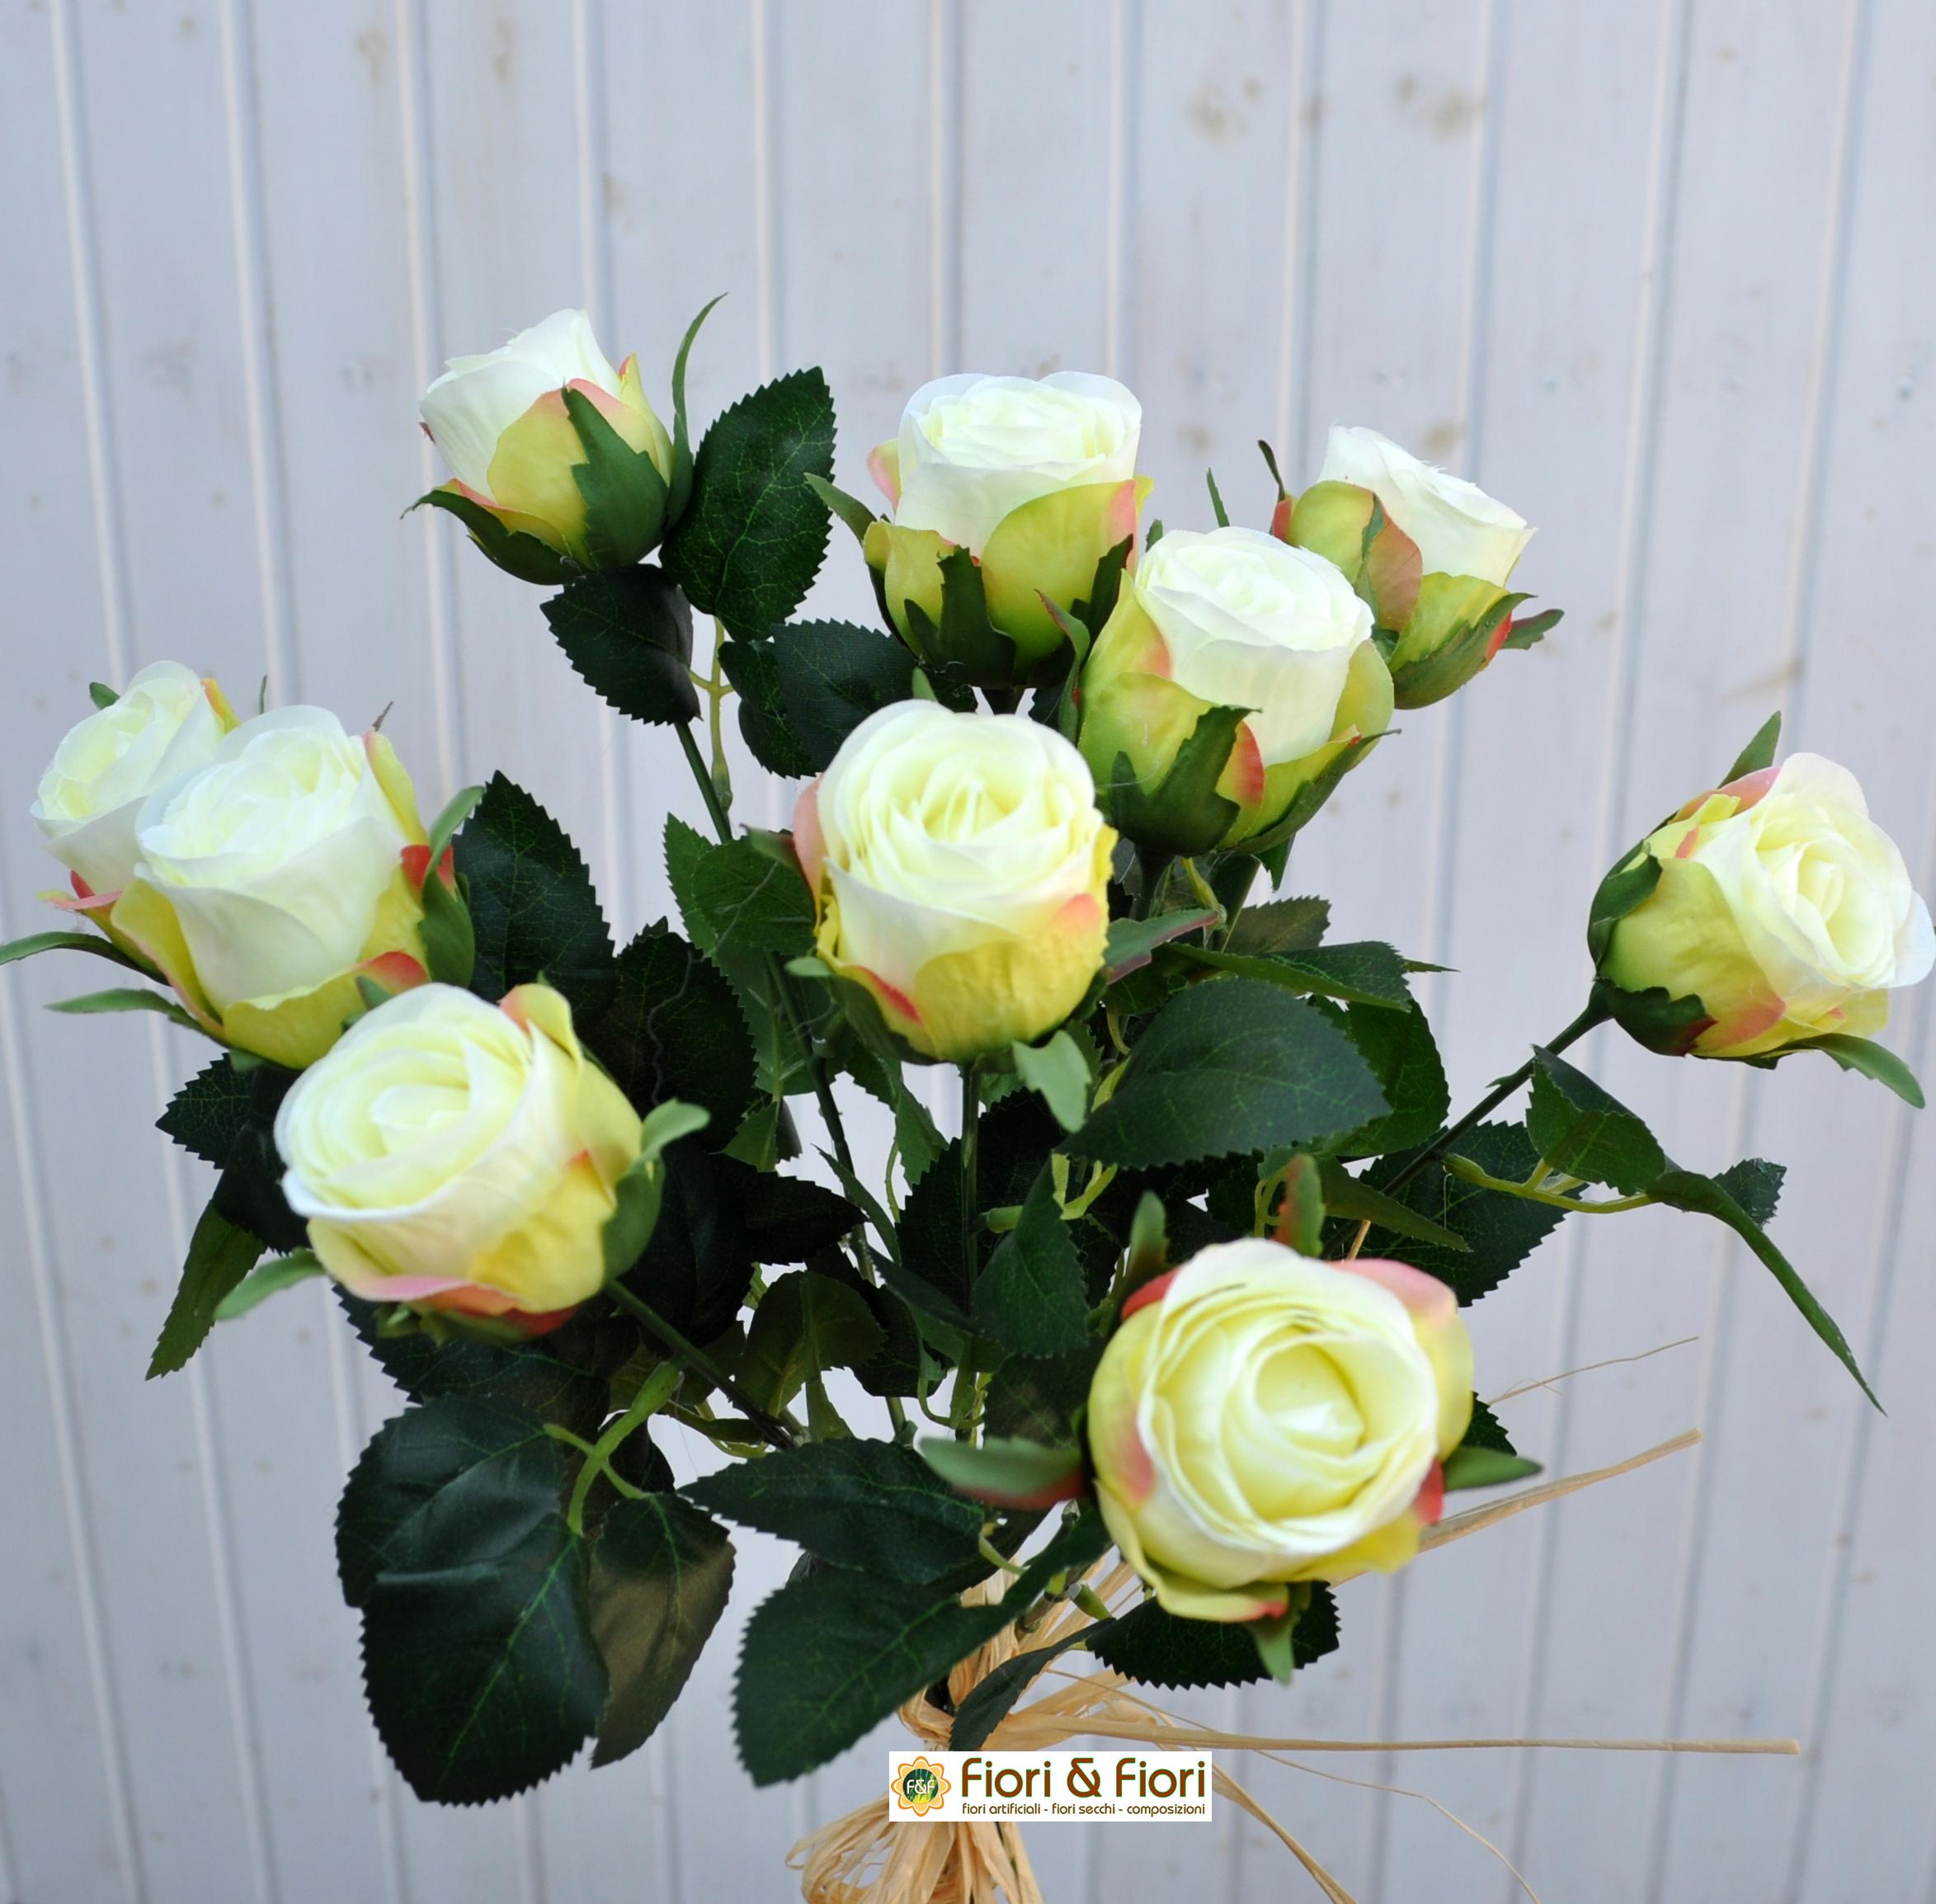 Rose artificiali verdi in materiale di qualità per decorazioni floreali